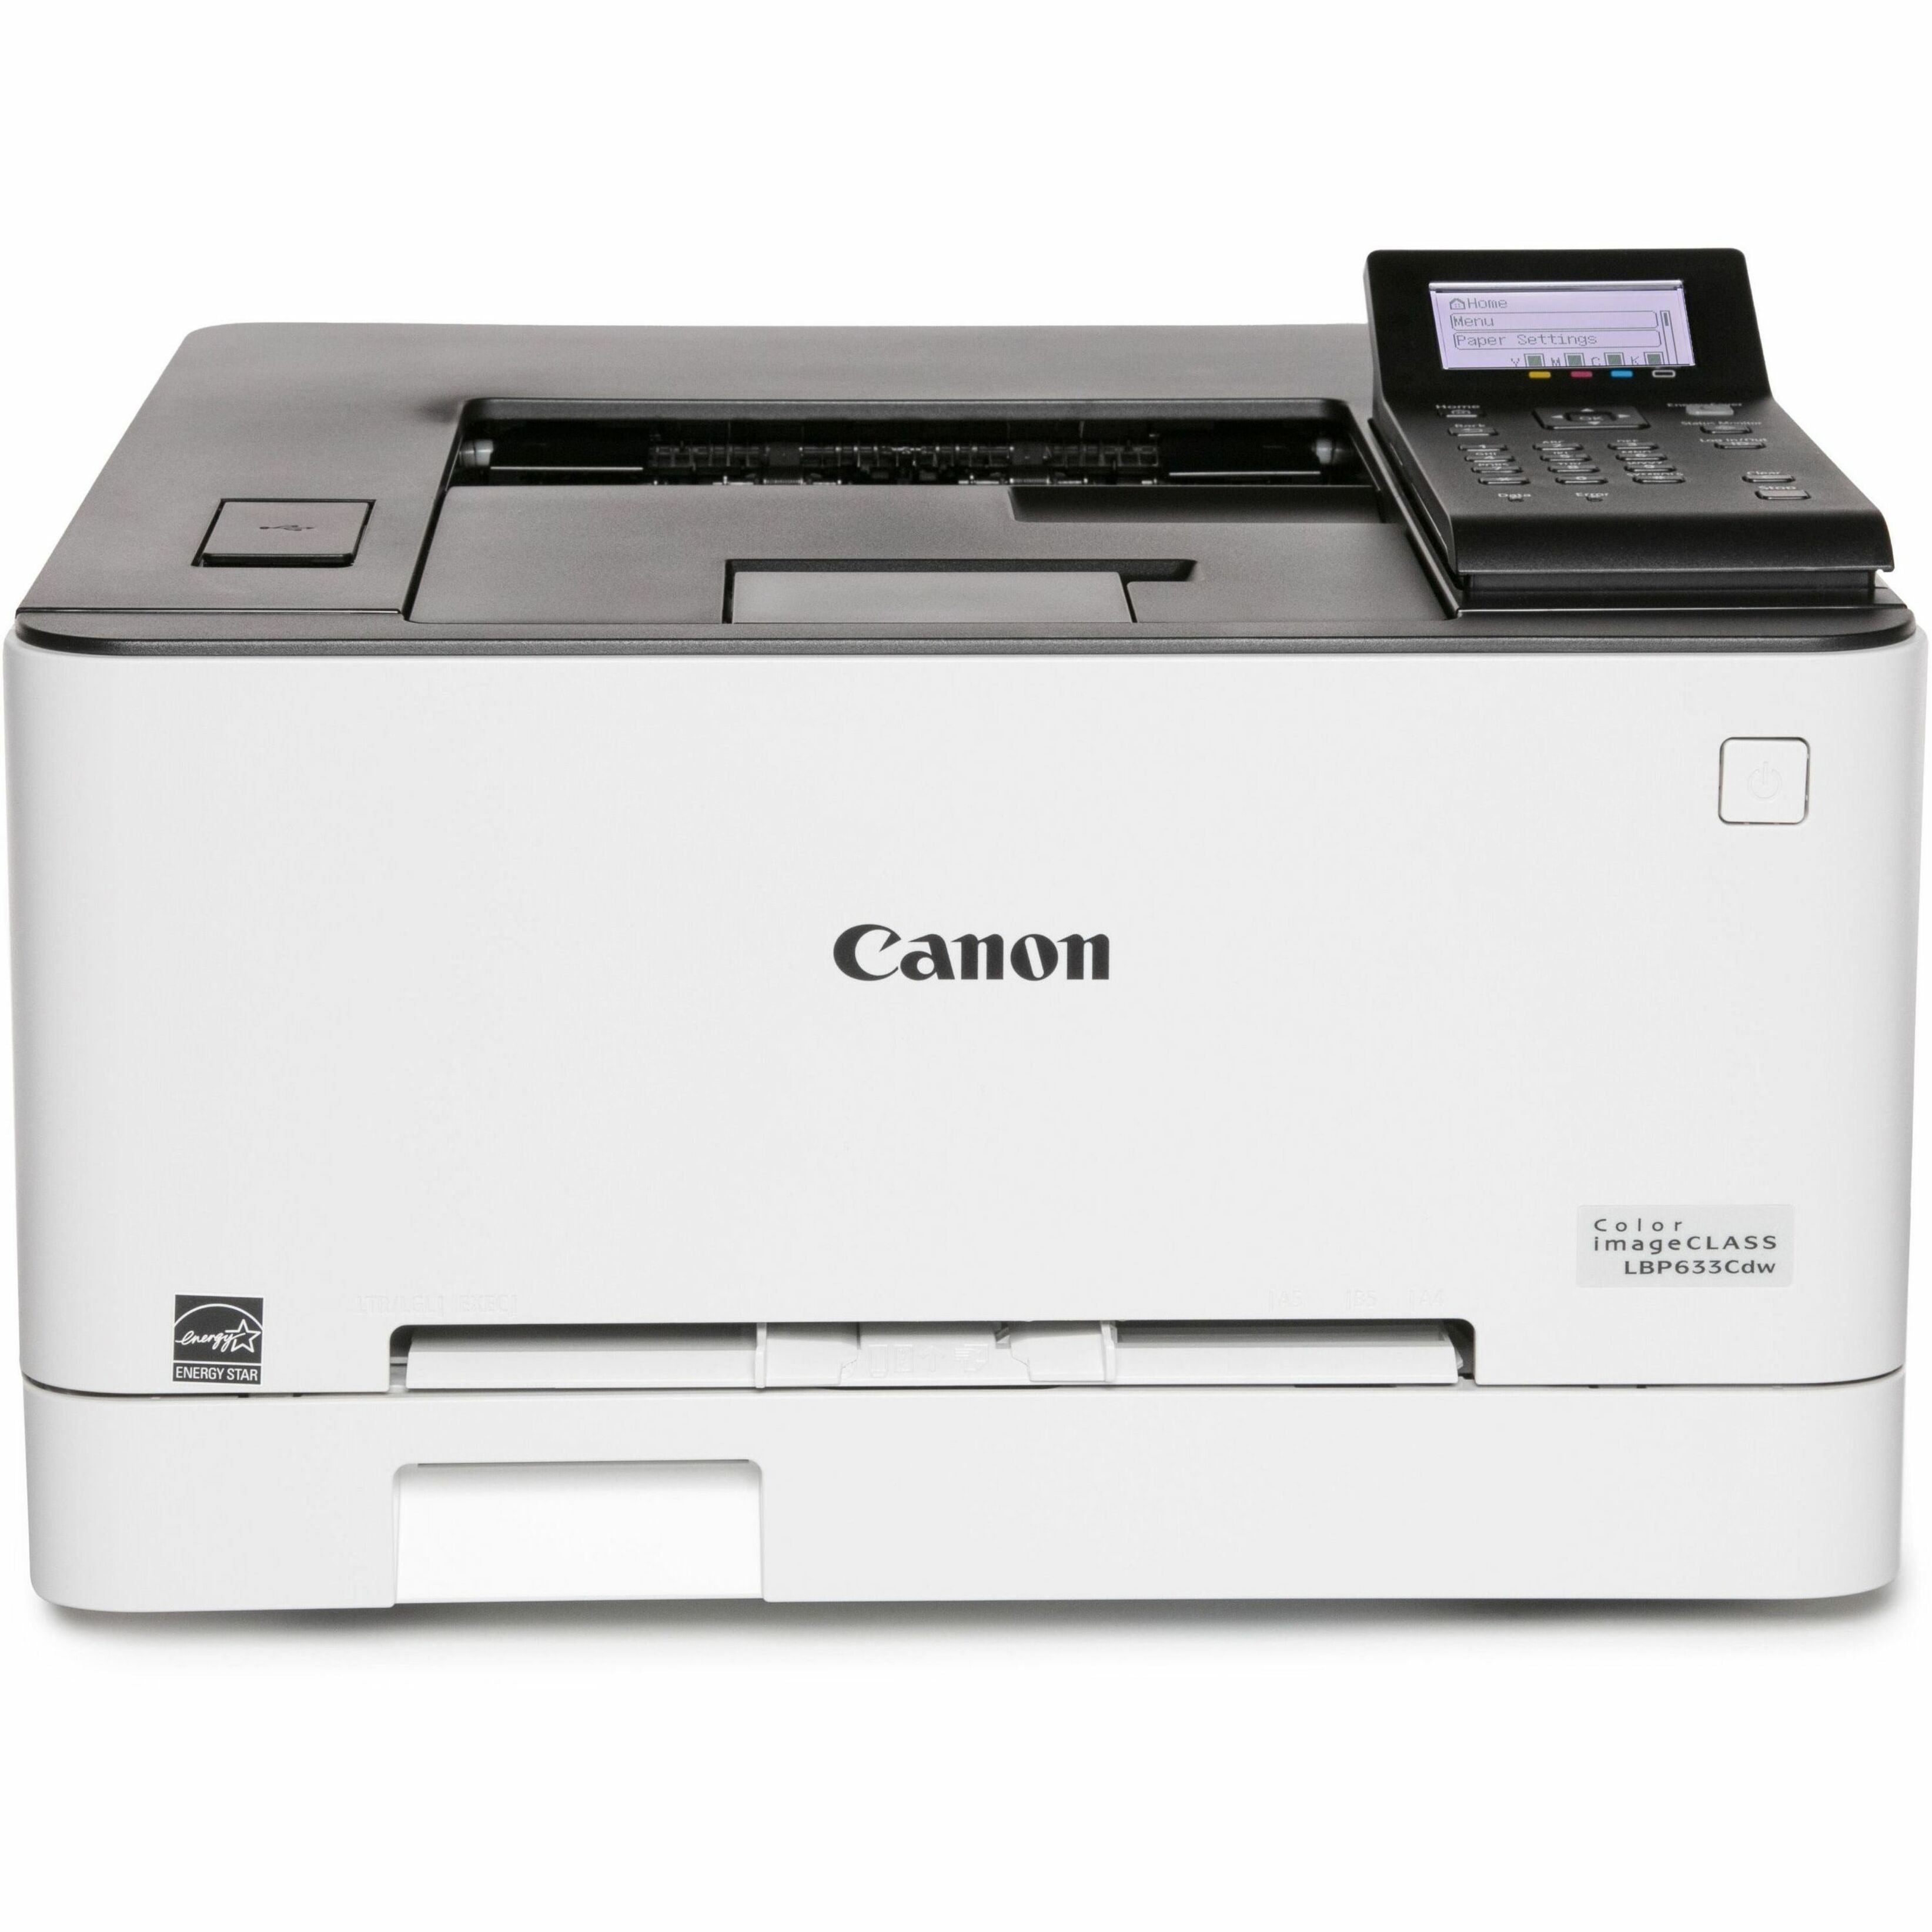 Canon 5159C002 imageCLASS LBP633Cdw Laser Printer, Color, Wireless, 1 Year Warranty